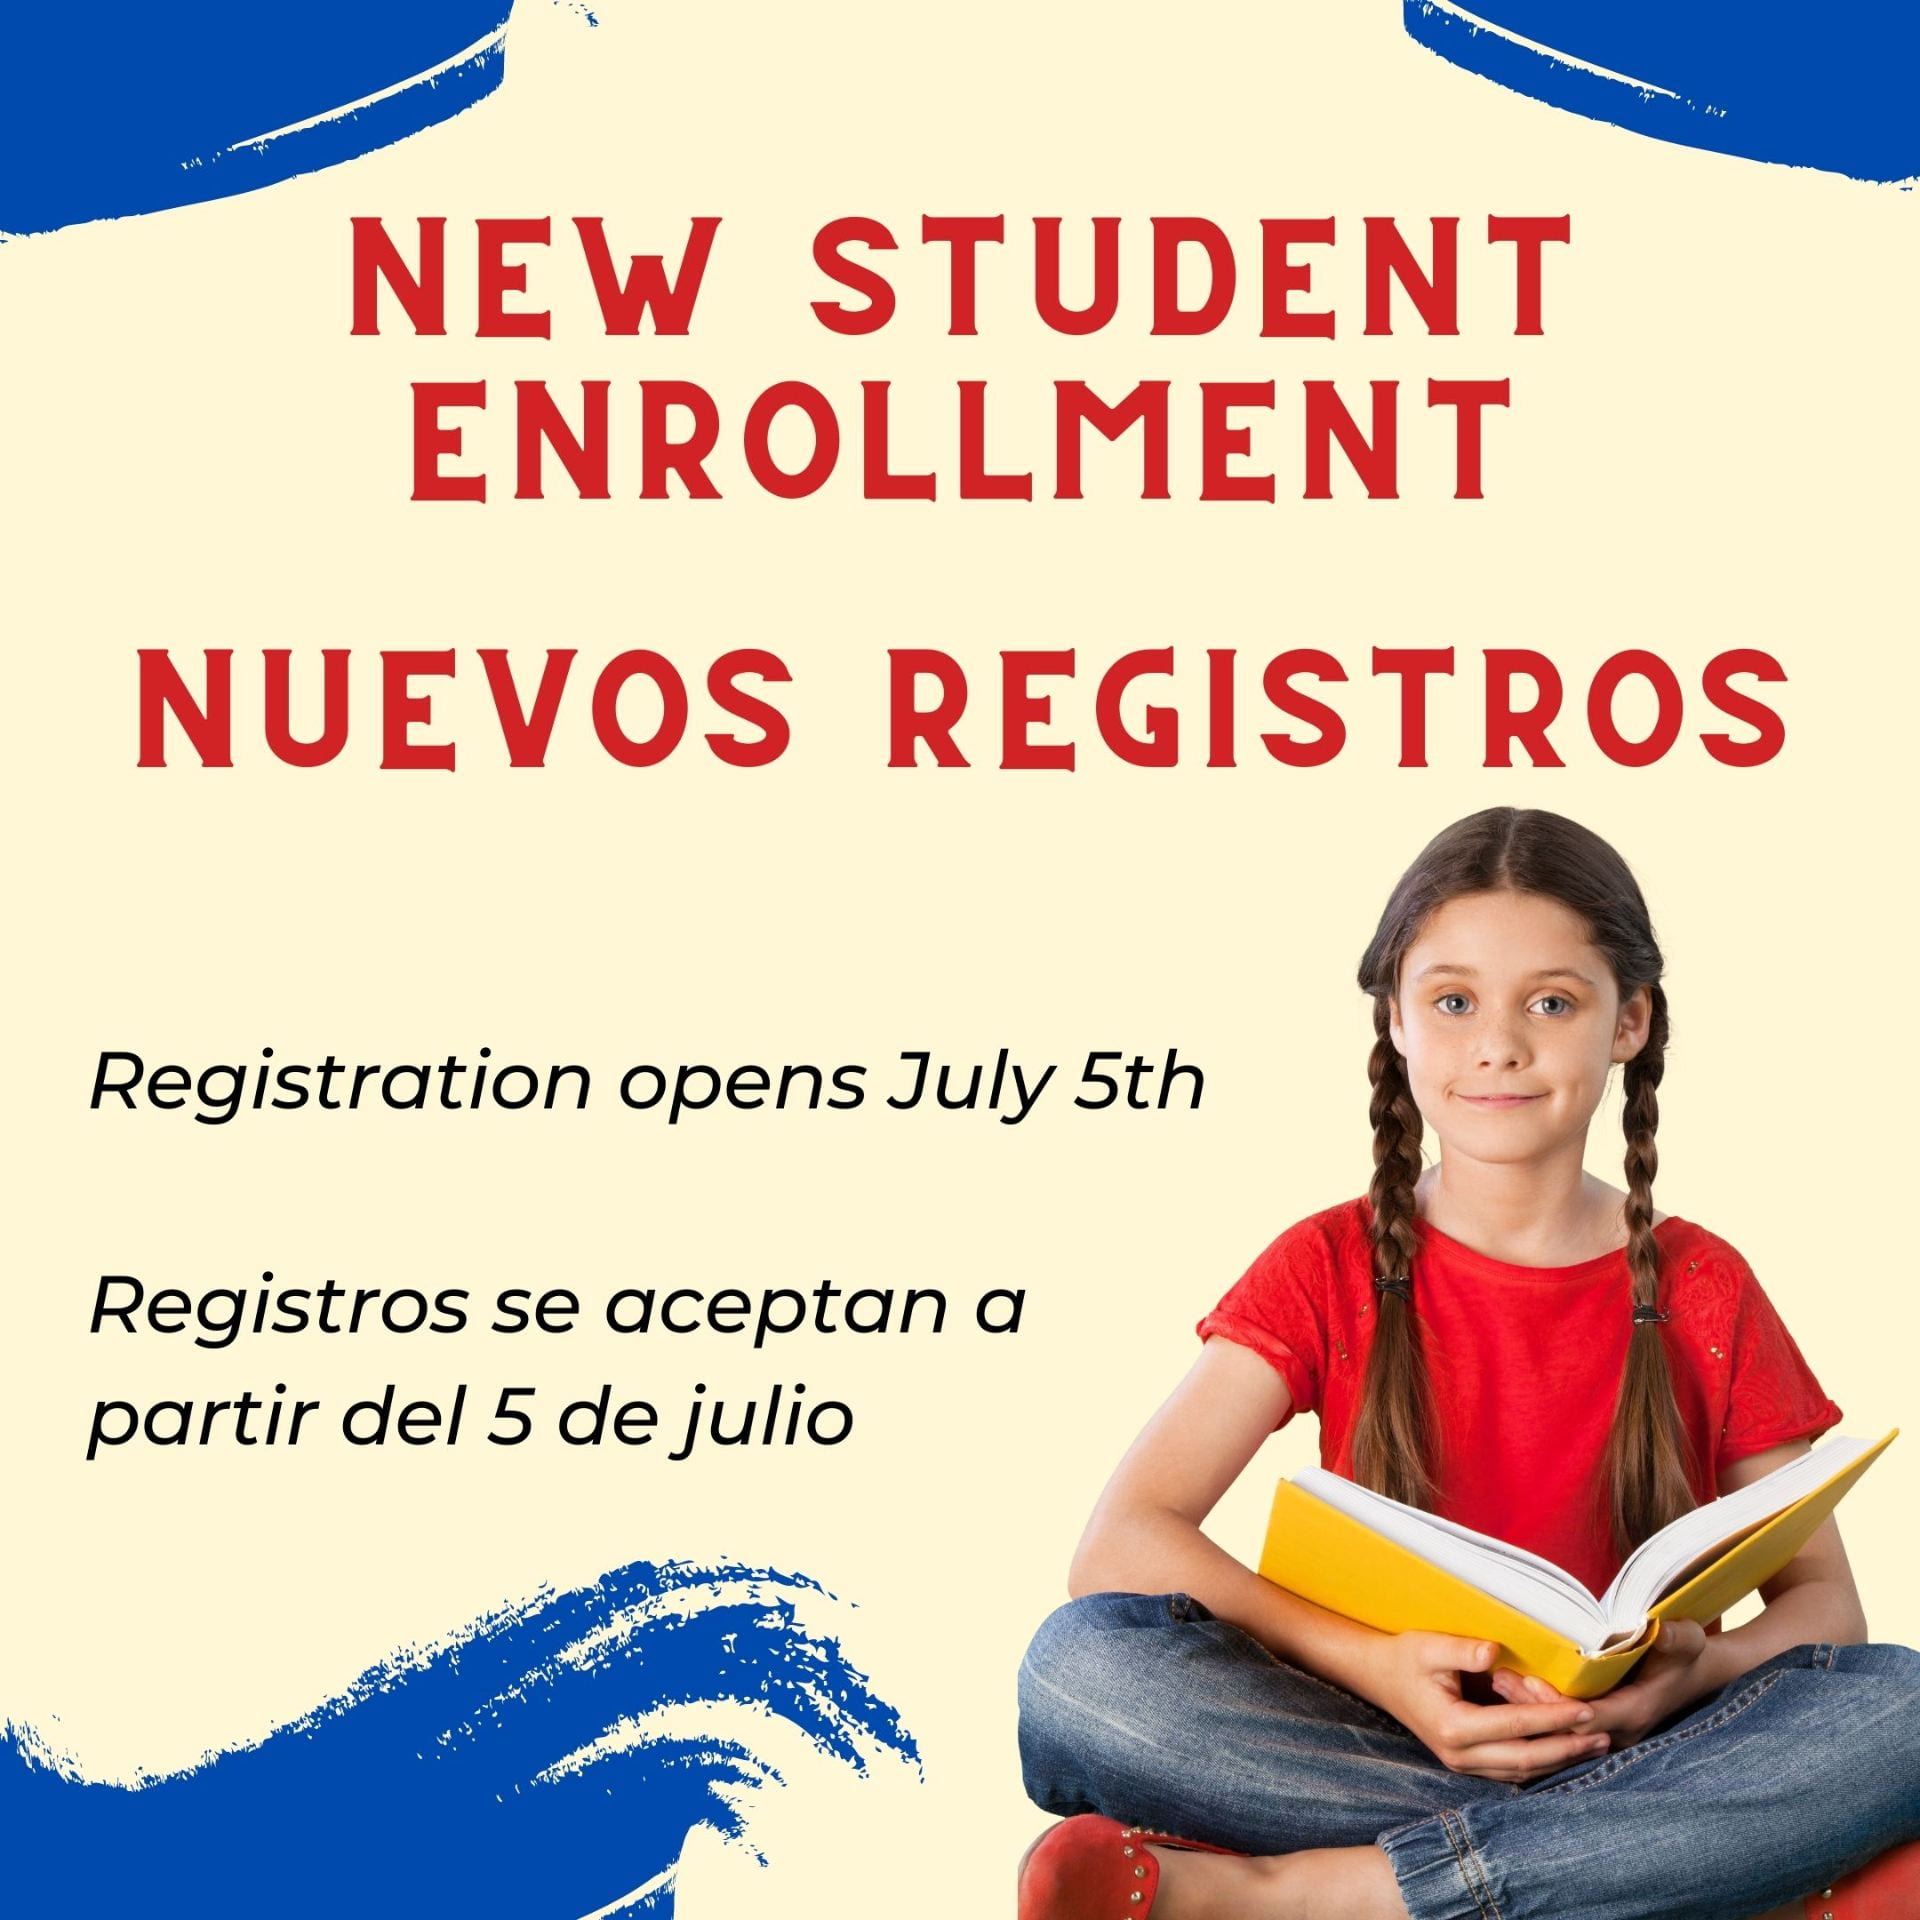 New Student Enrollment Nuevos Registros Registration opens July 5 Registros se aceptan a partir del 5 de julio